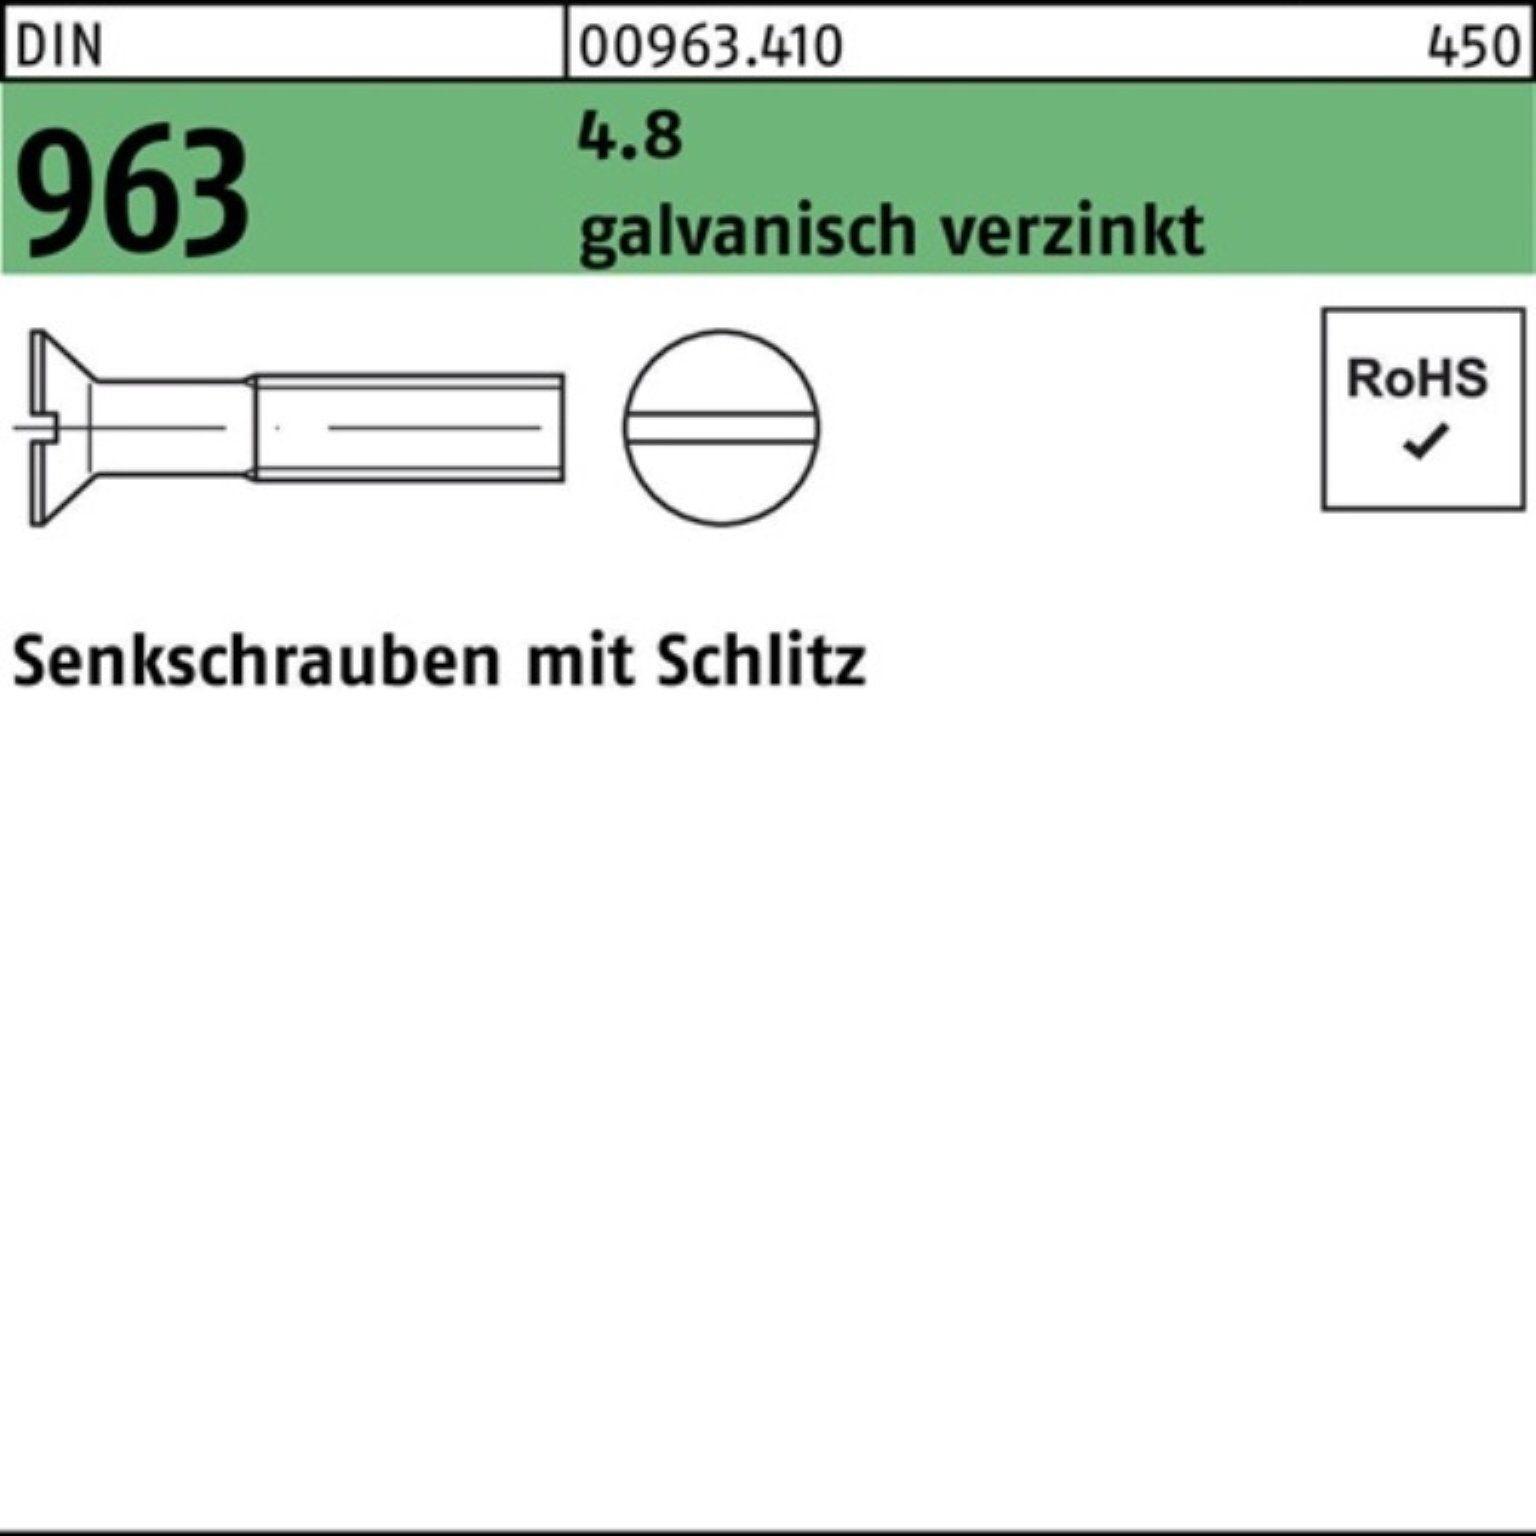 Reyher Senkschraube 200er Pack Senkschraube 4.8 DIN 20 galv.verz. 200 Schlitz Stü 963 M5x